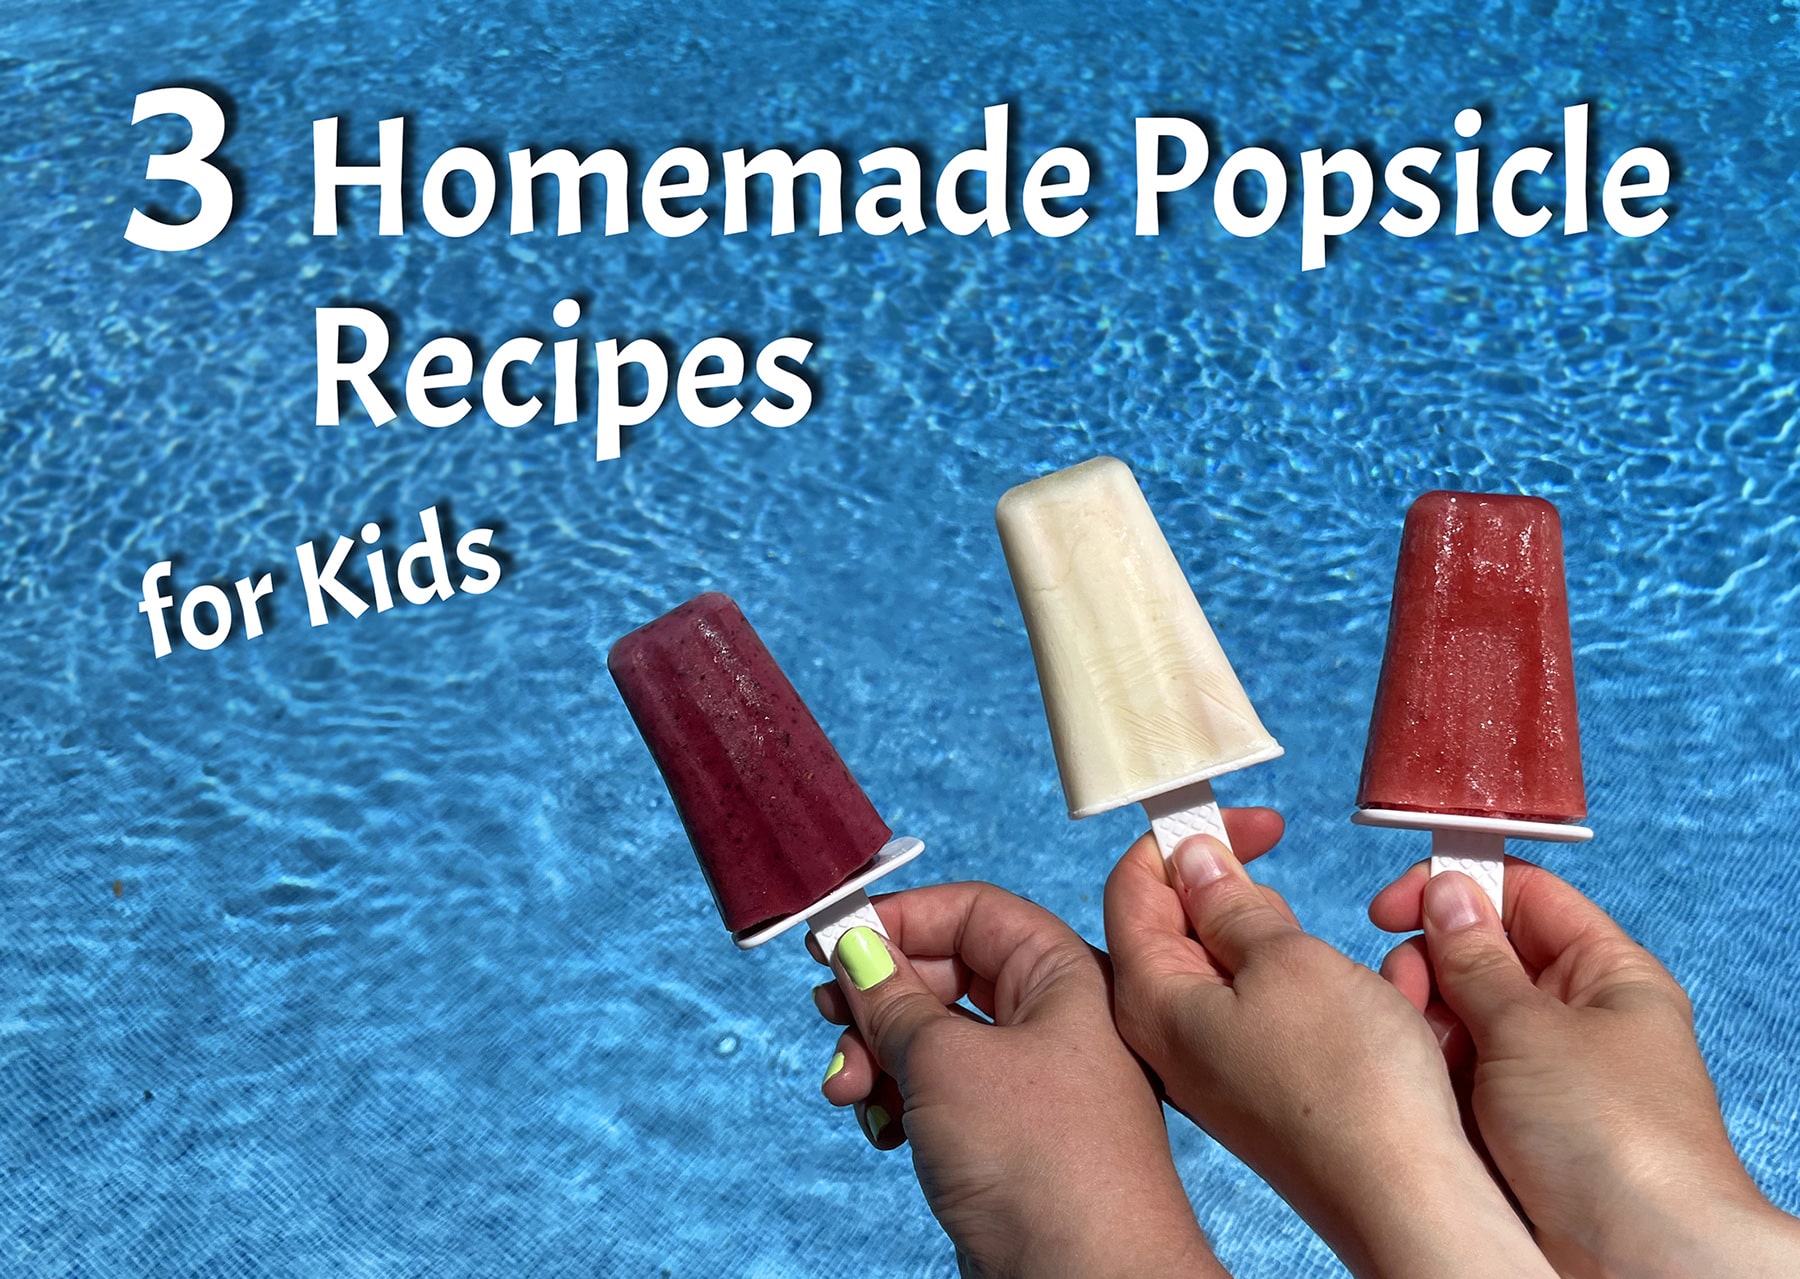 Homemade Popsicle Recipes for Summer